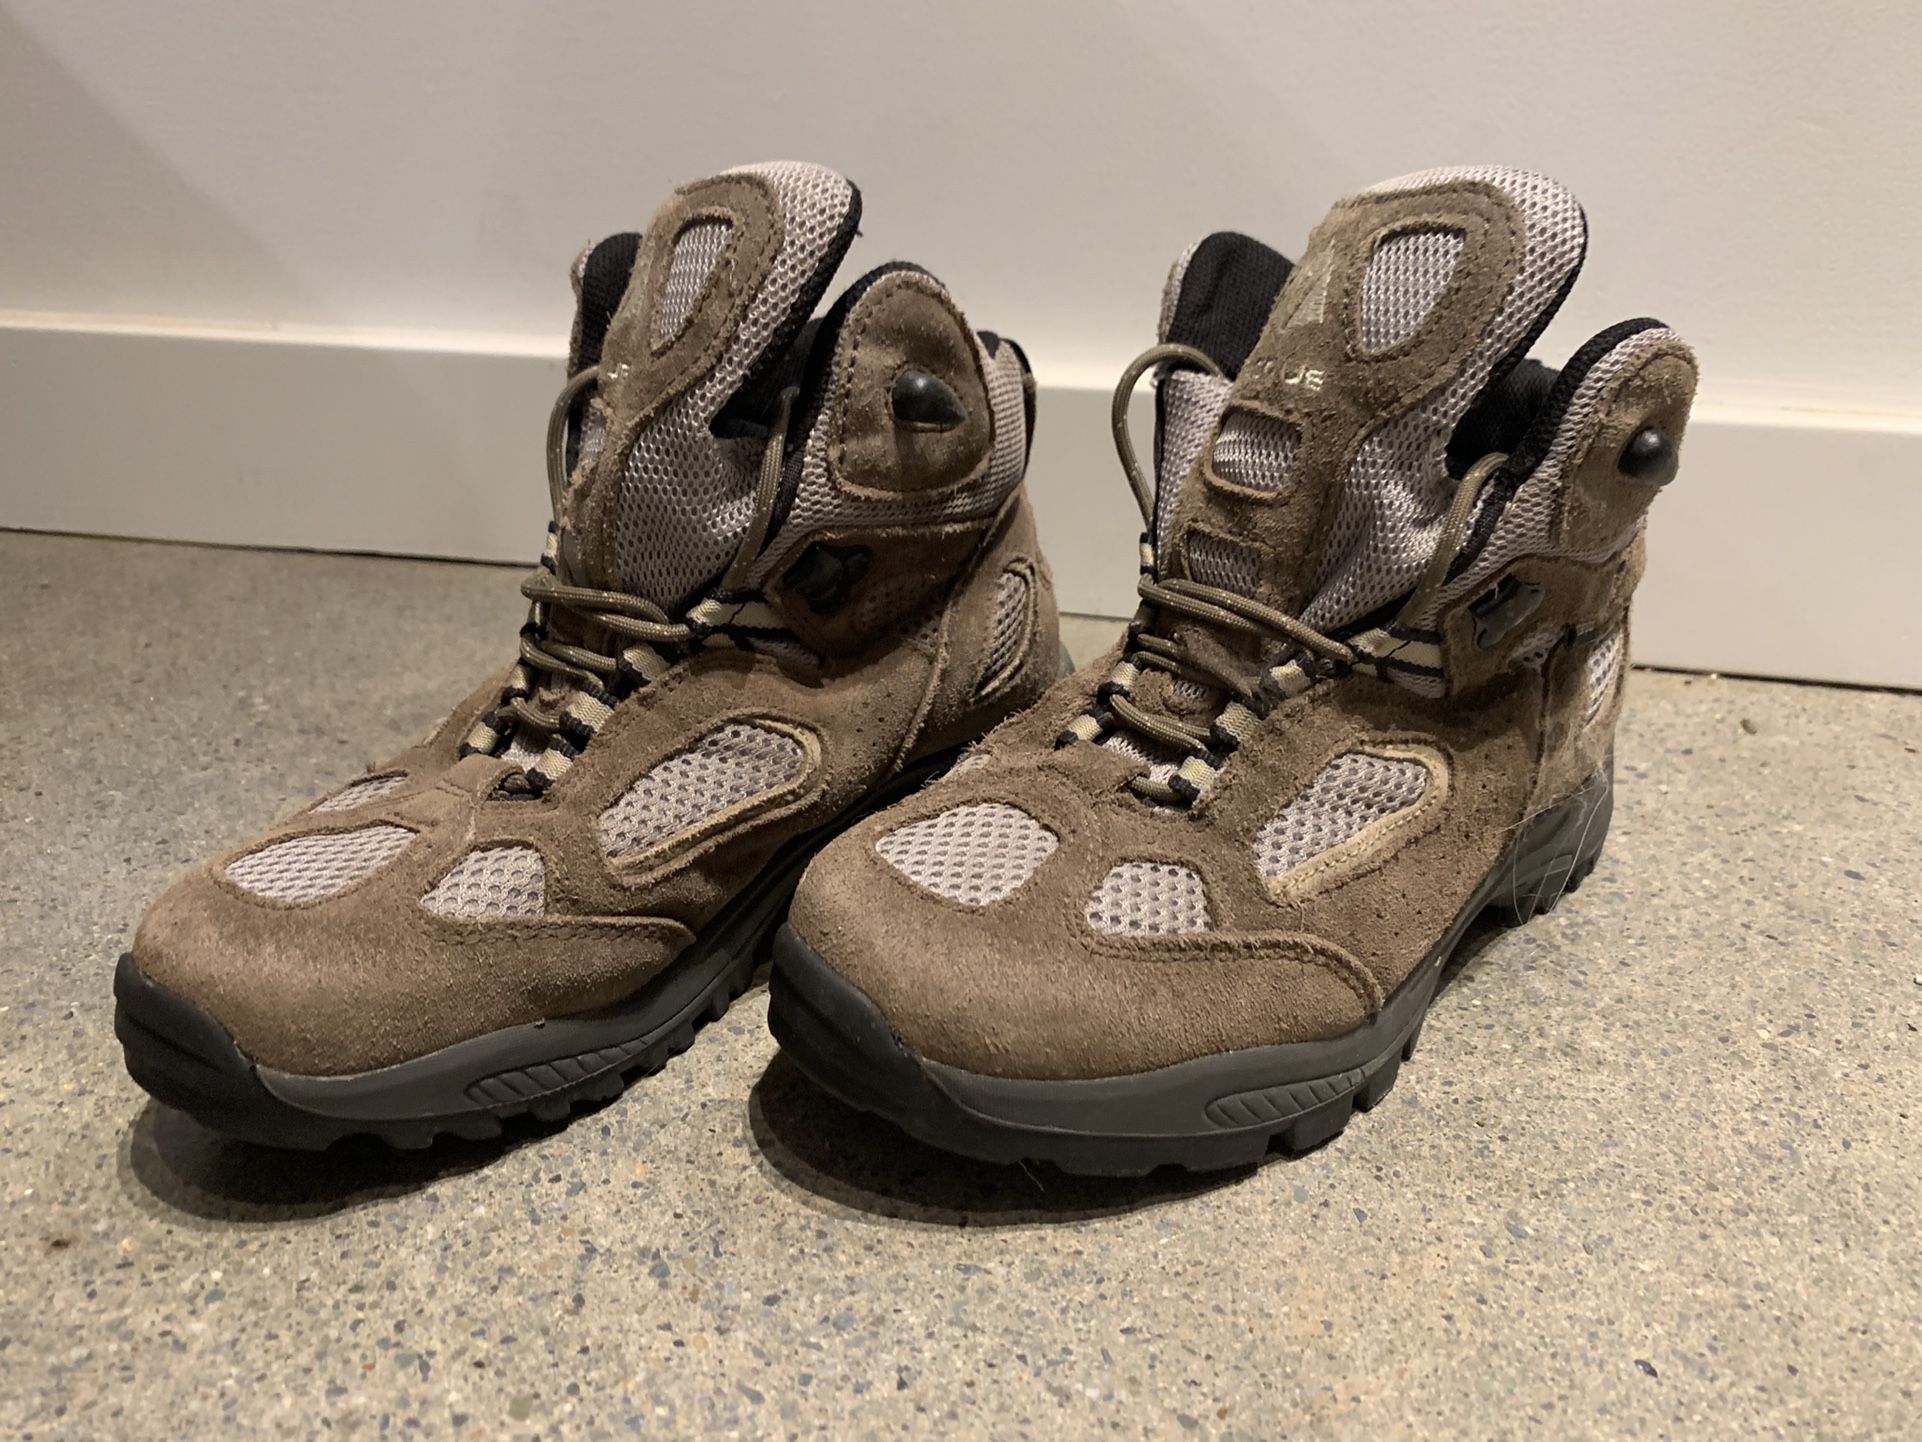 Vasque Hiking Boots Sz 4